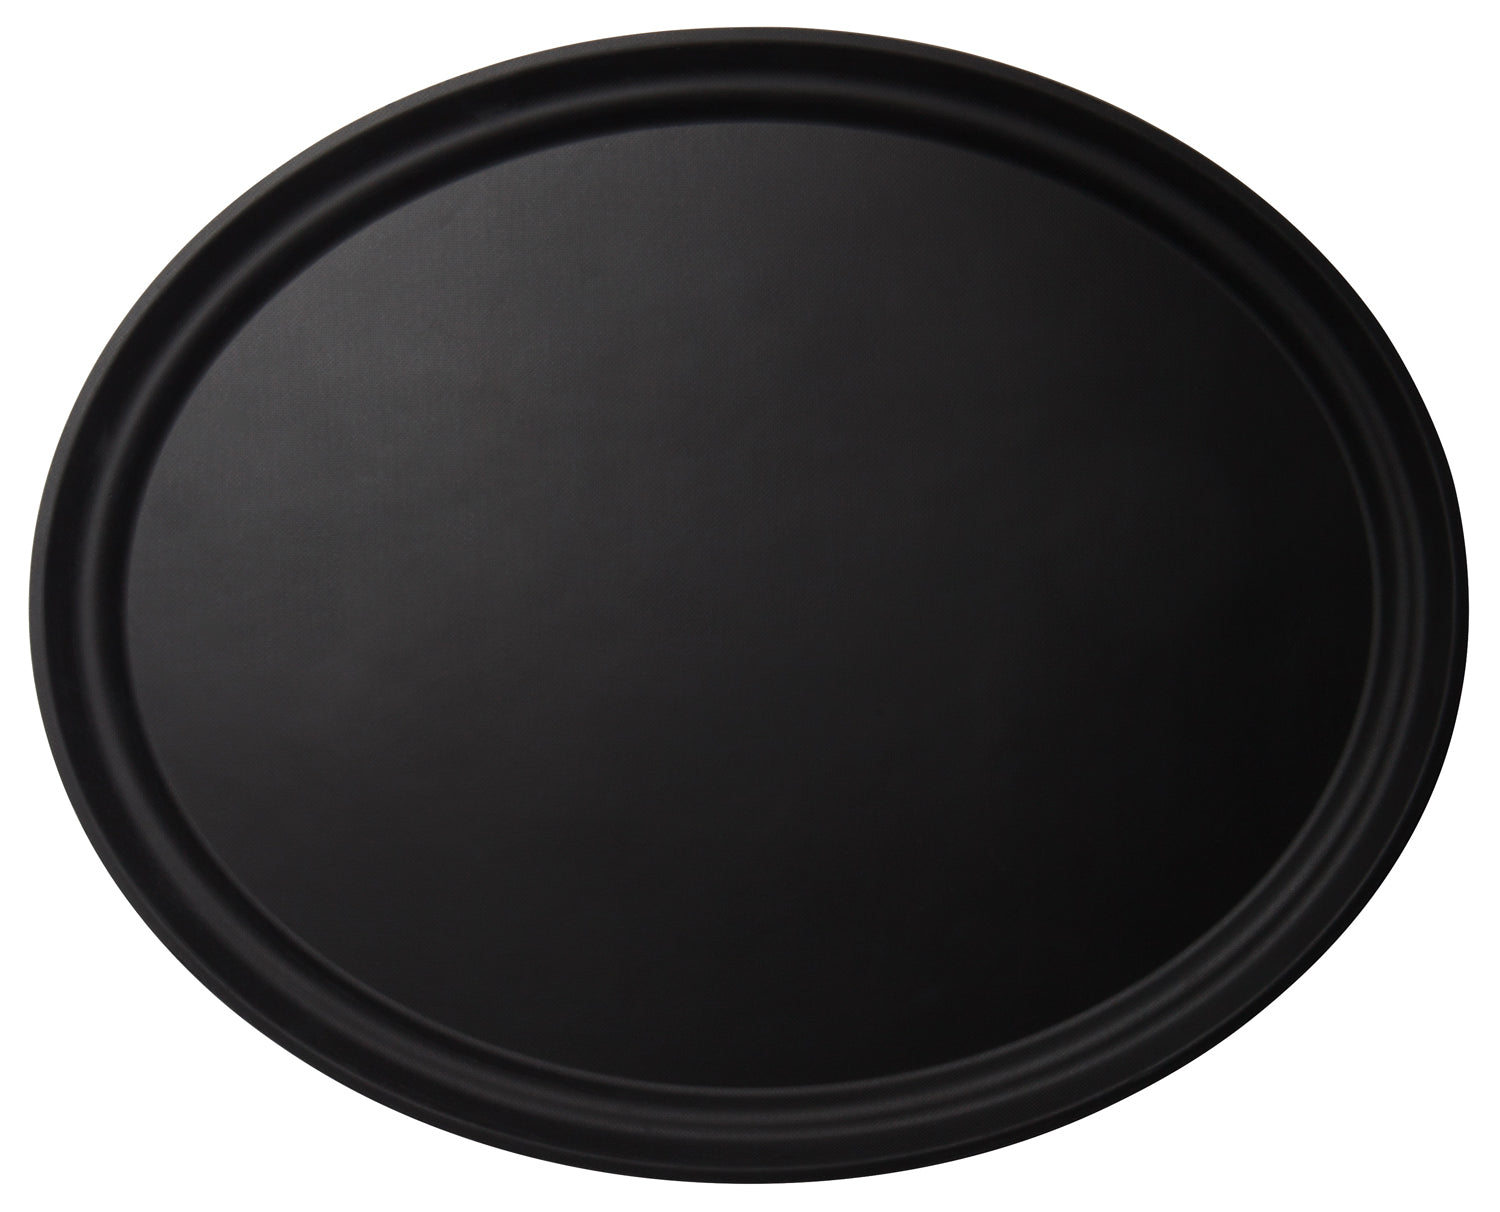 Cambro Camtread® Fiberglass Tablett mit rutschfester Gummioberfläche, oval – niedriges Profil 23,83 x 81 cm, 6 Stück im Karton - 2500CT110